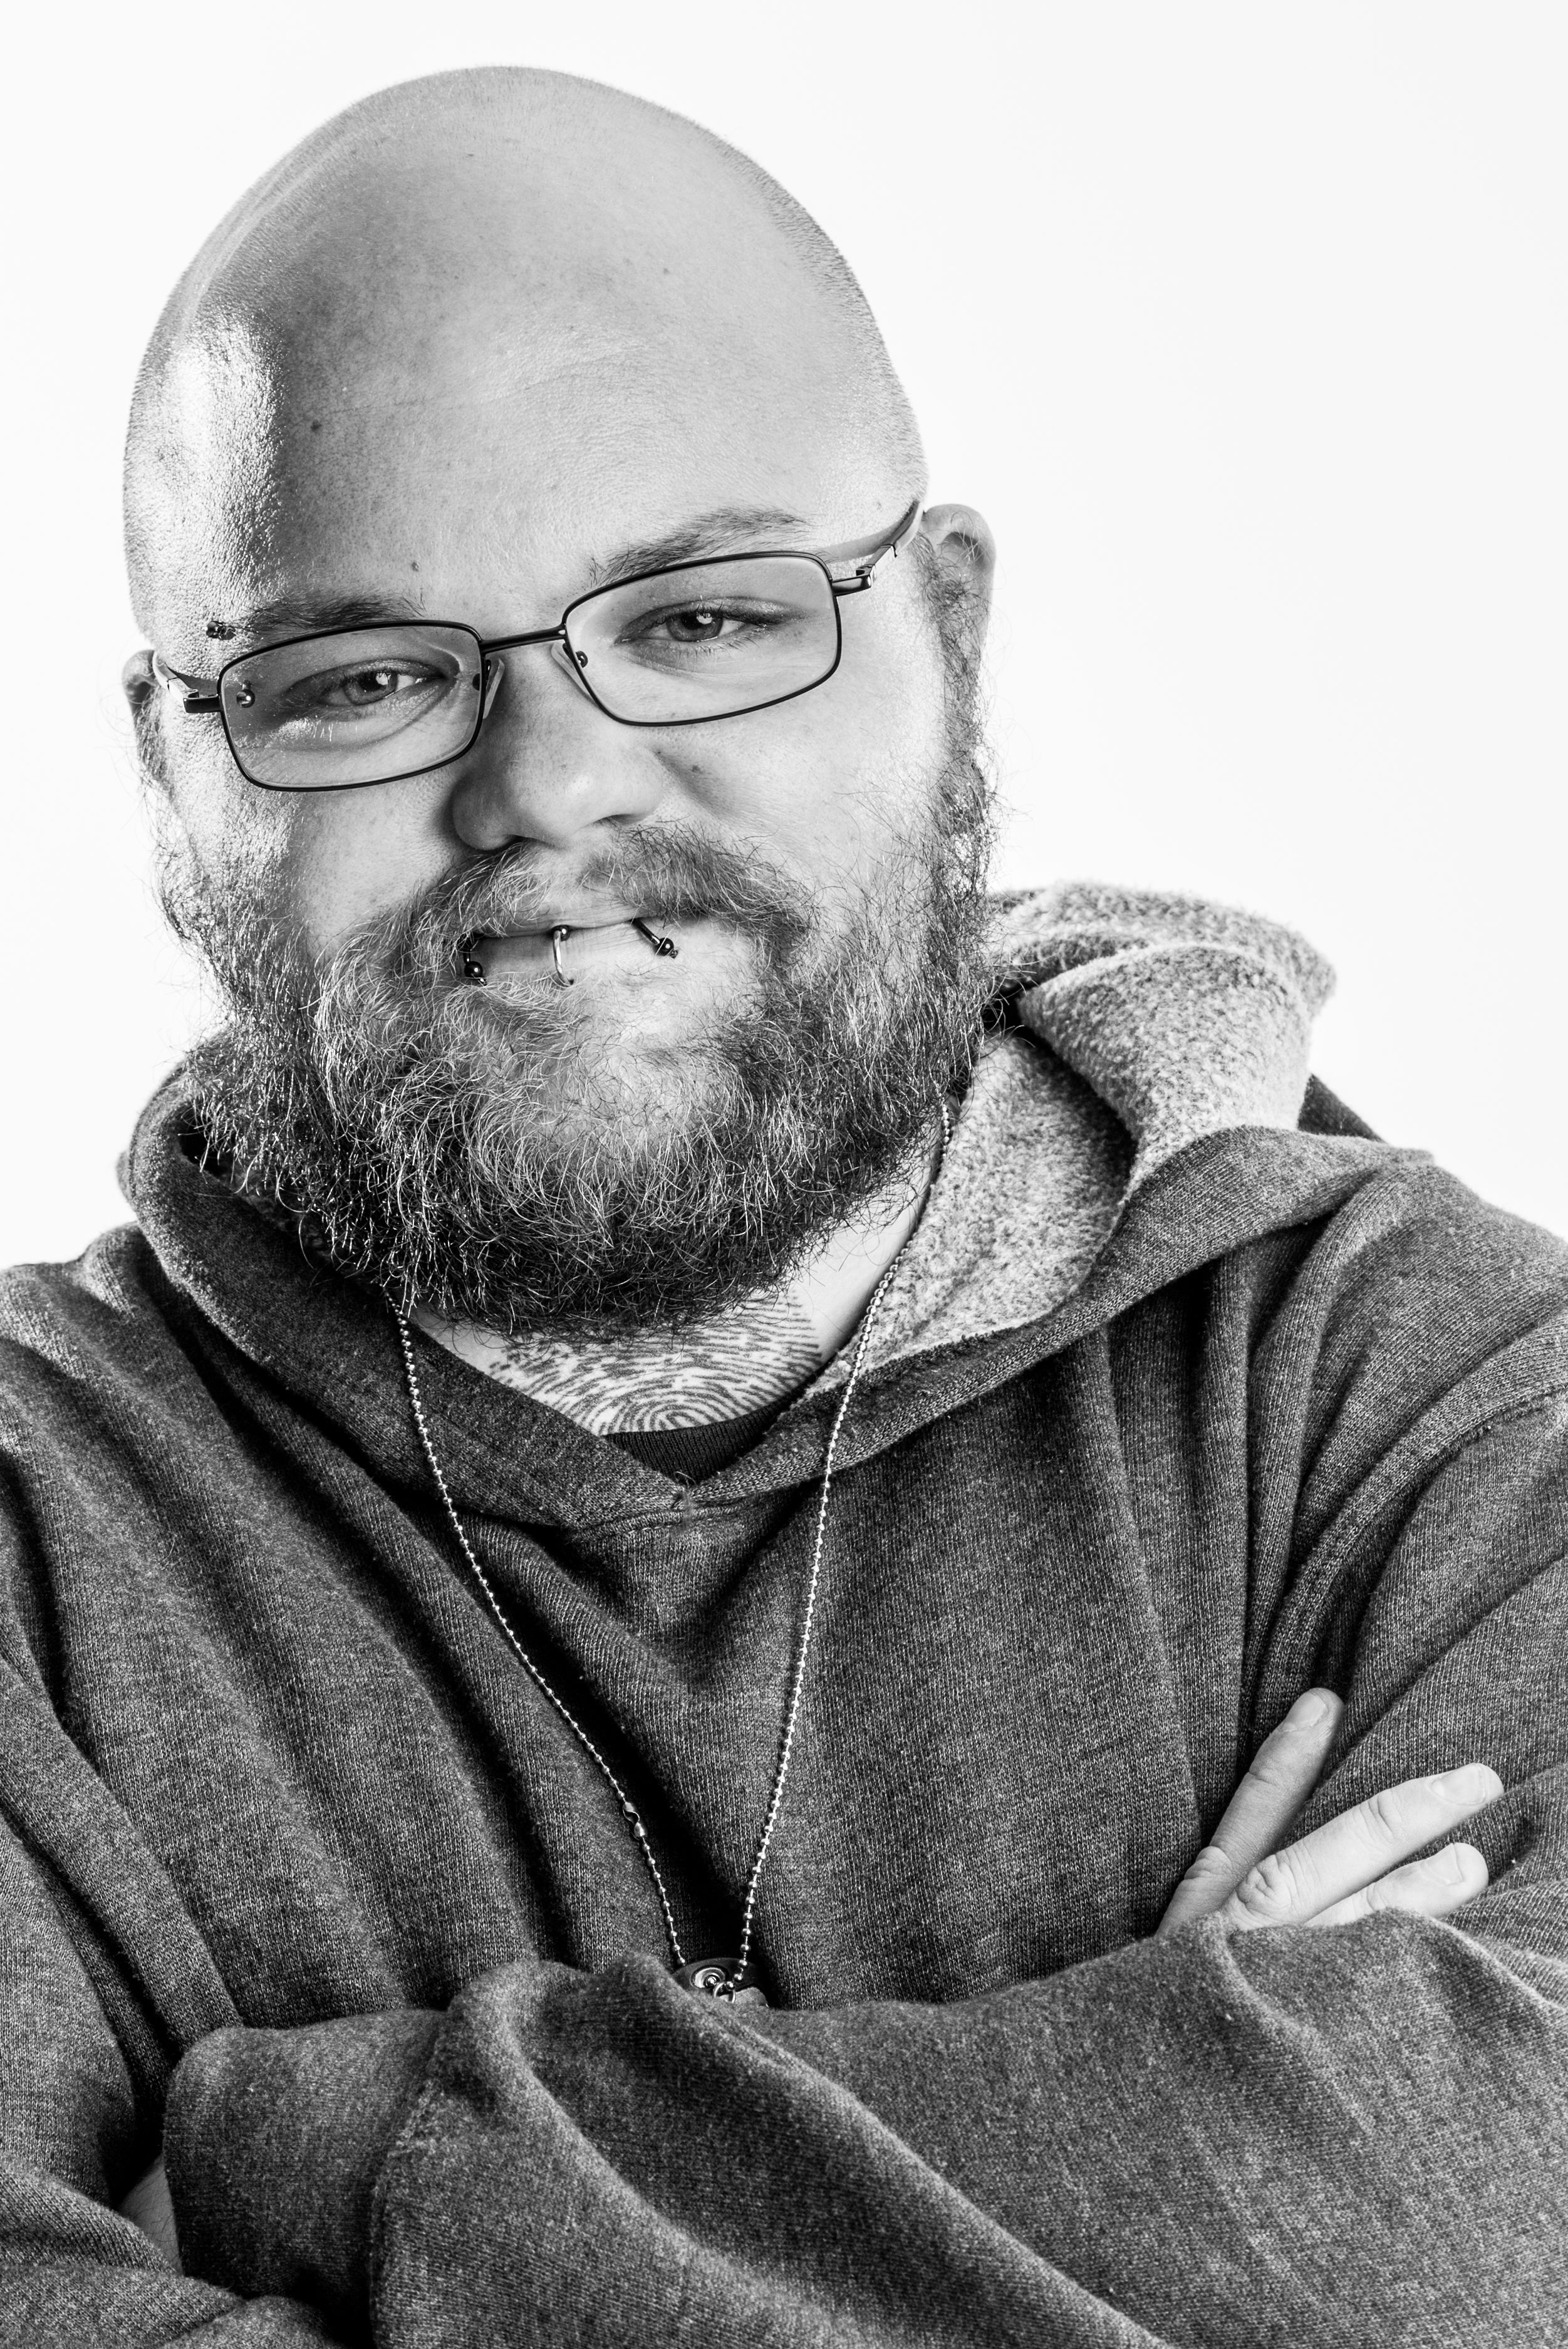 B&W portrait of bald man with beard on white background in studio